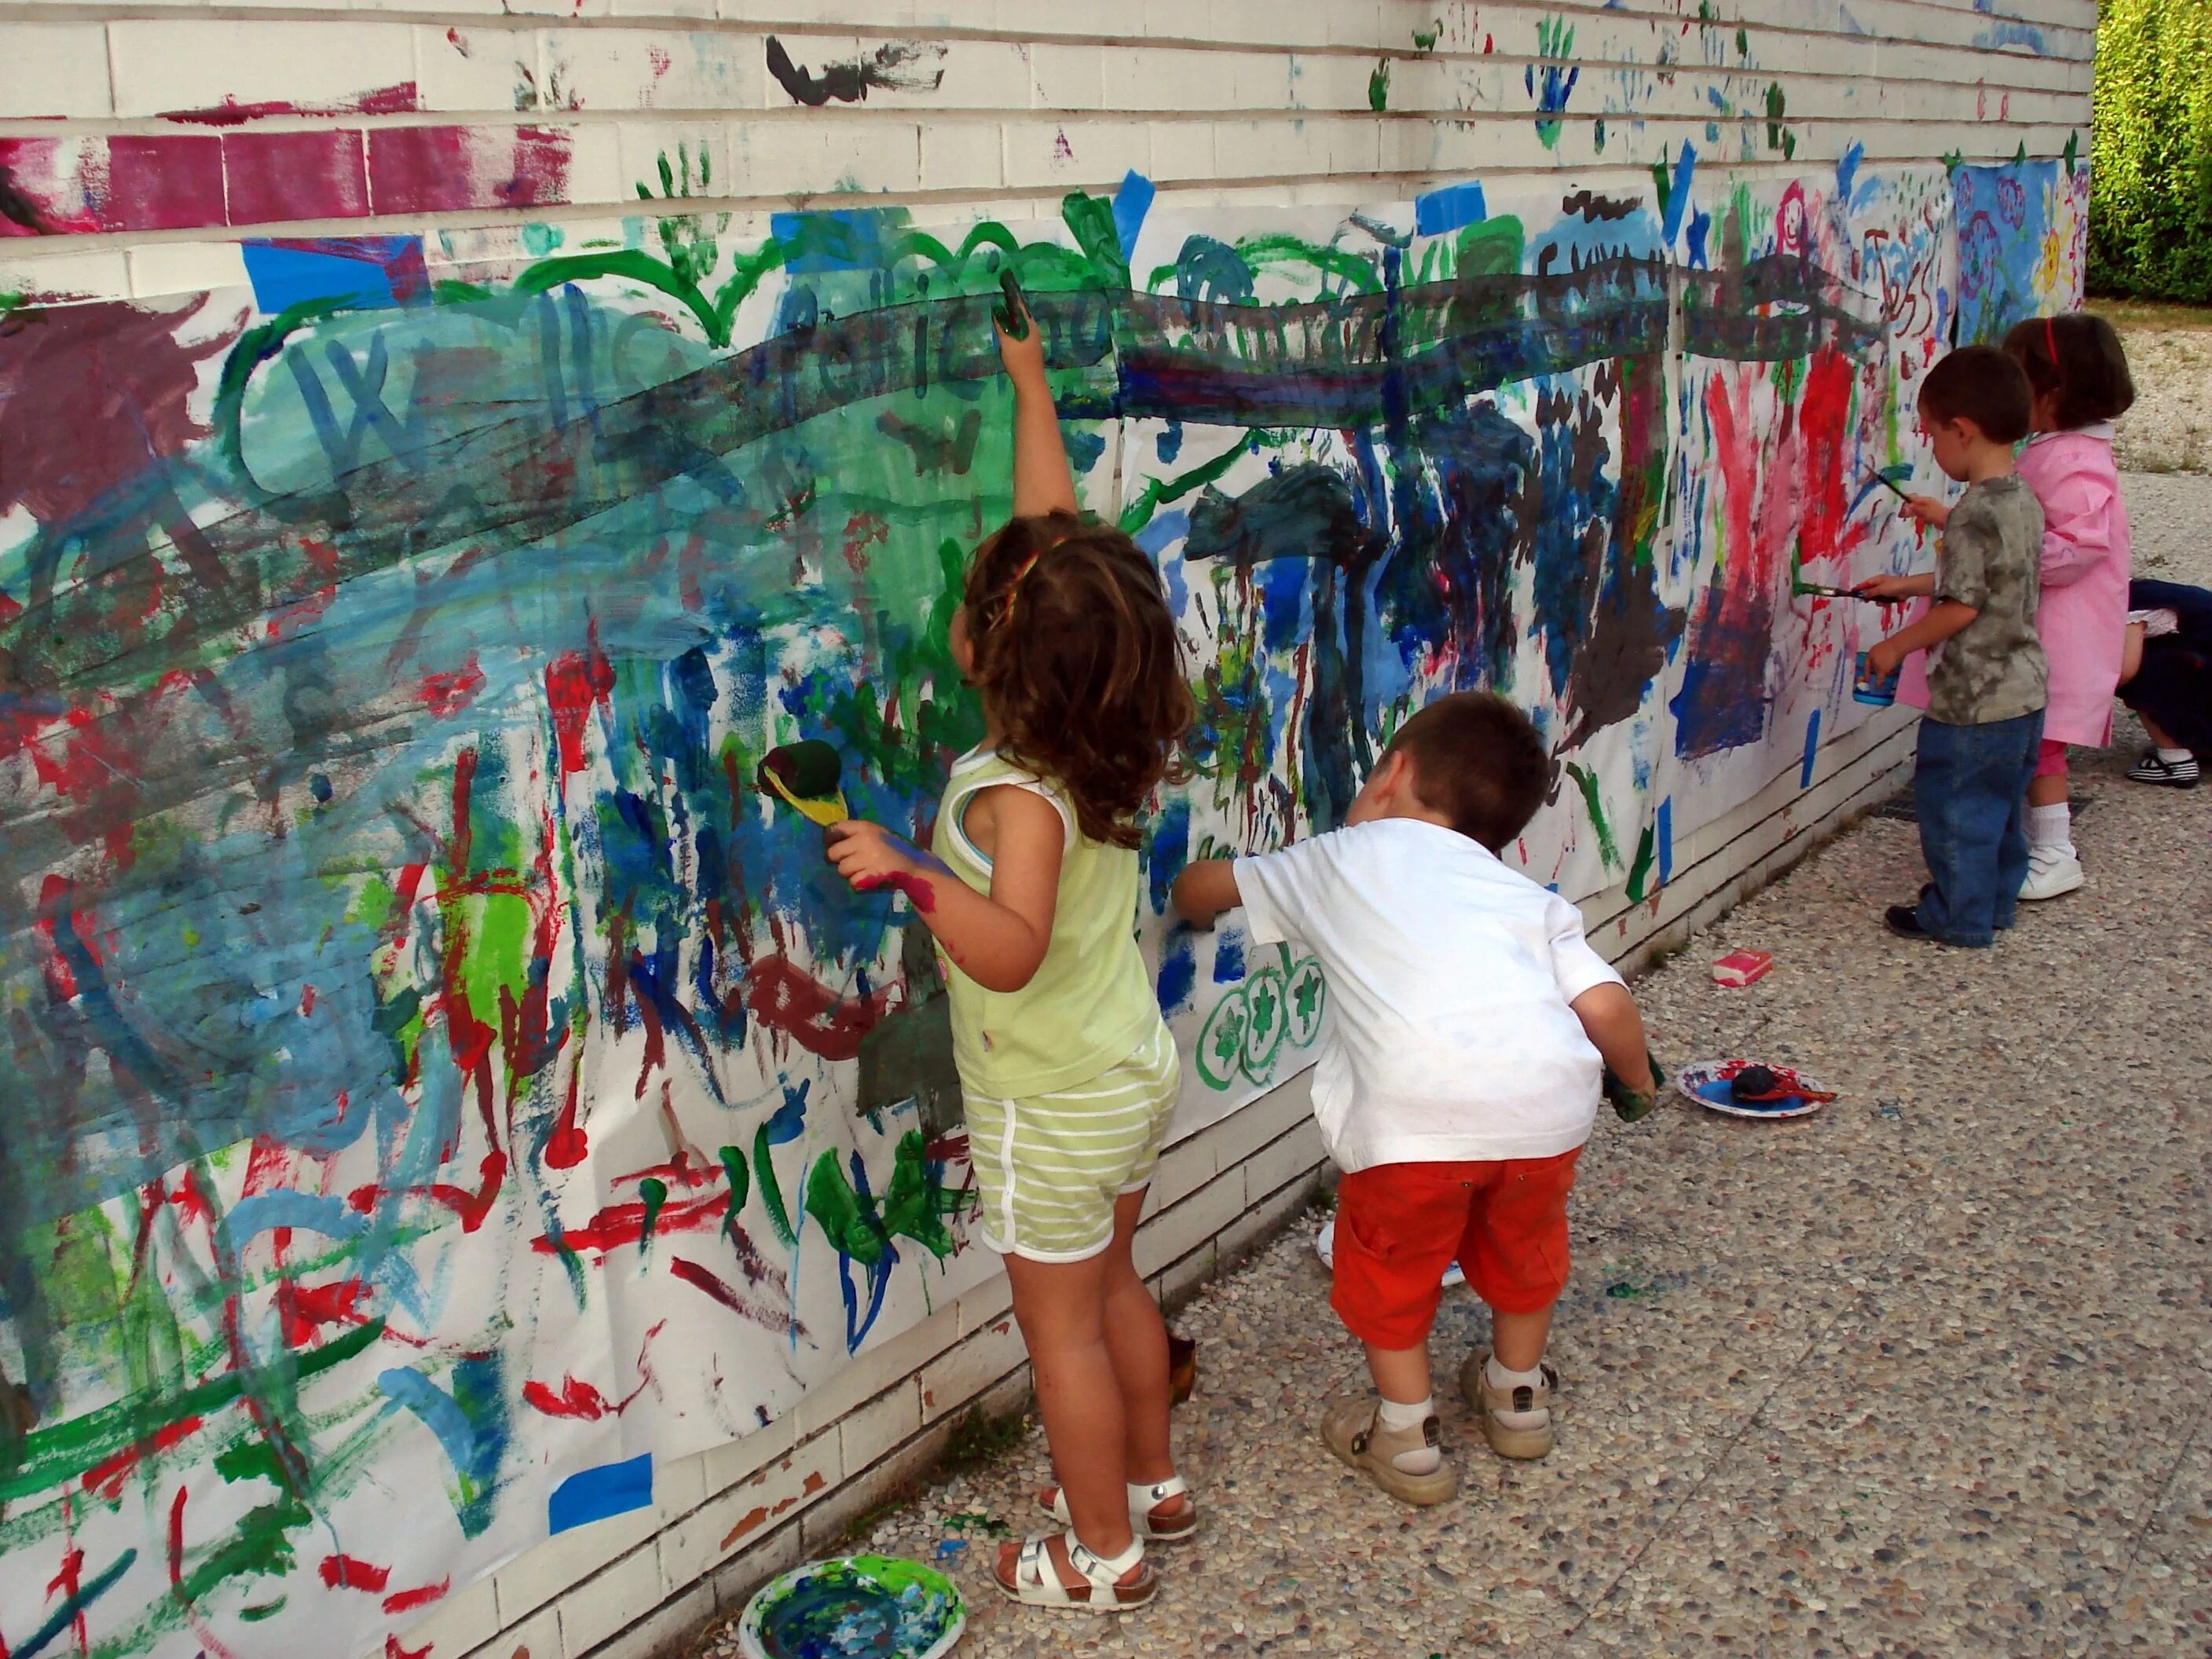 Children's painting. Ребенок разрисовал стены. Краски для детей. Картины для детей рисовать. Ребенок рисует на стене.